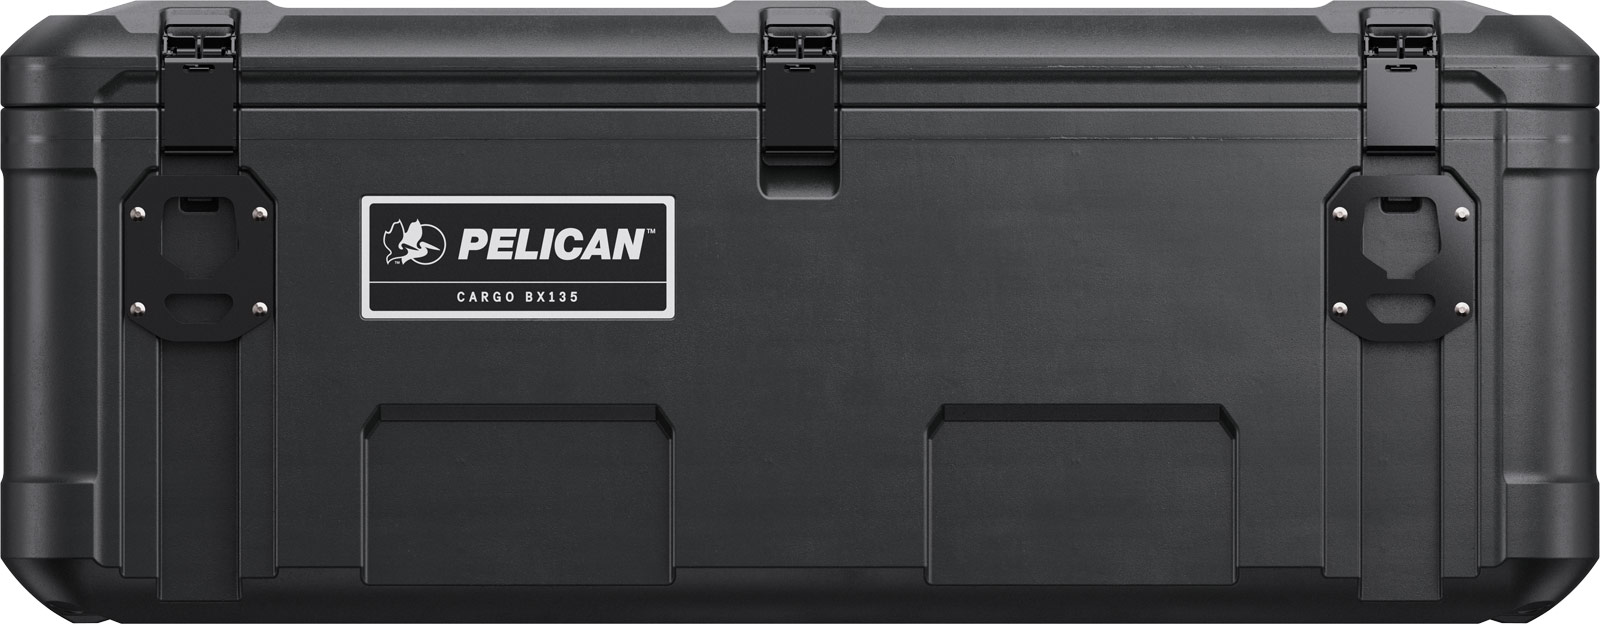 pelican cargo bx135 carrier case